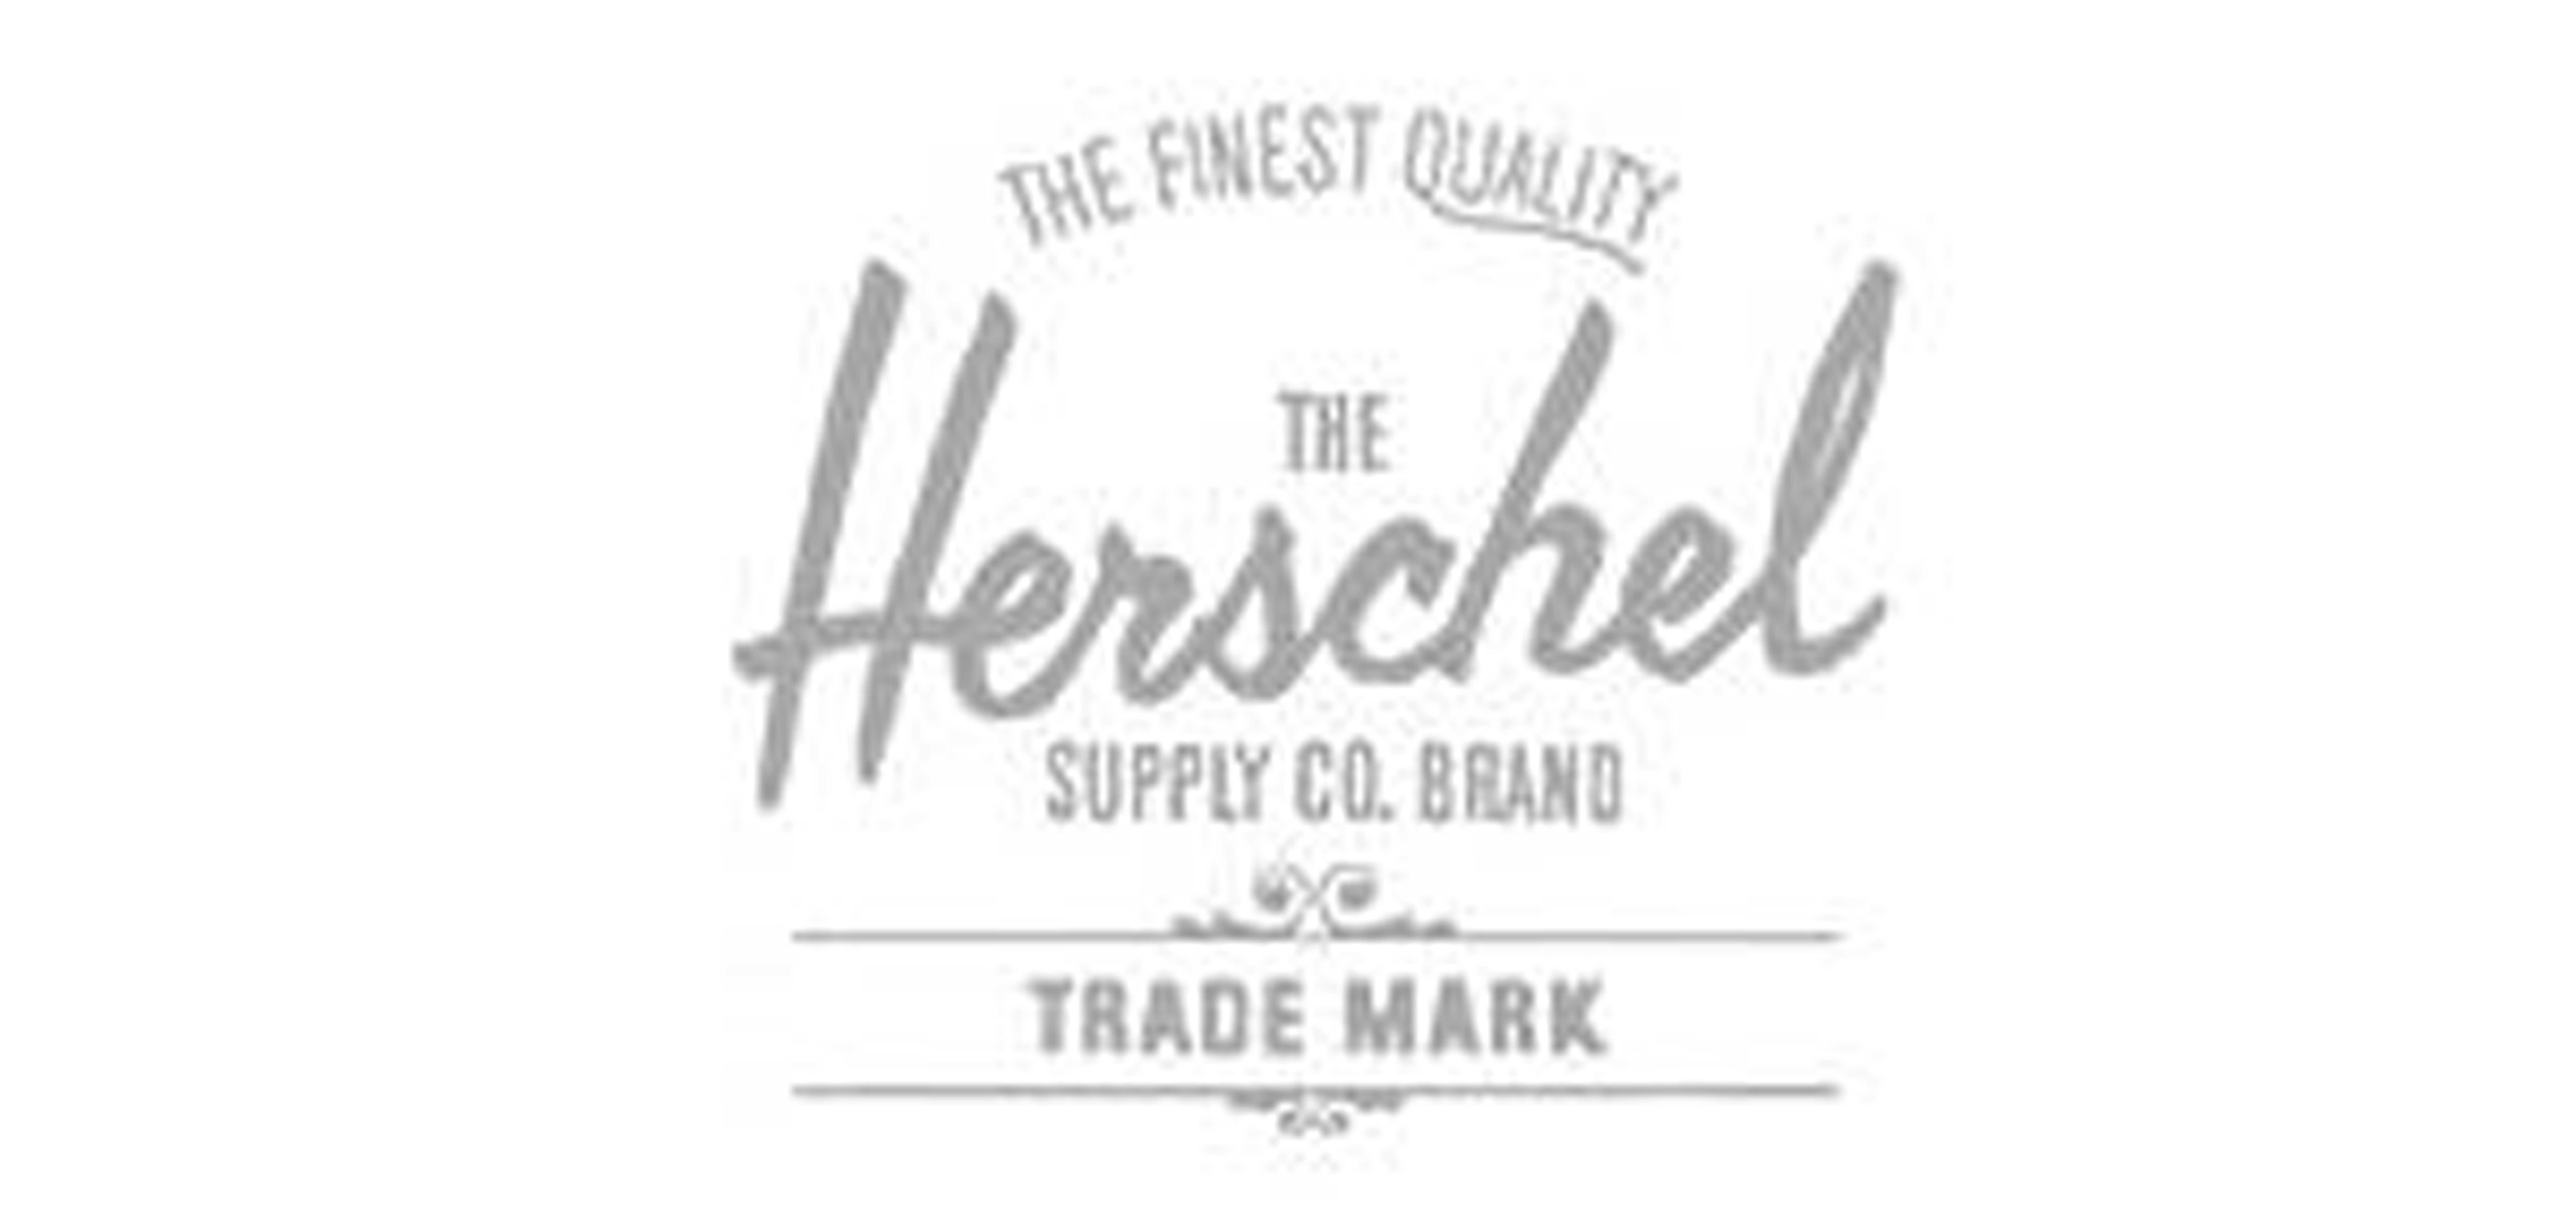 Herschel帆布包